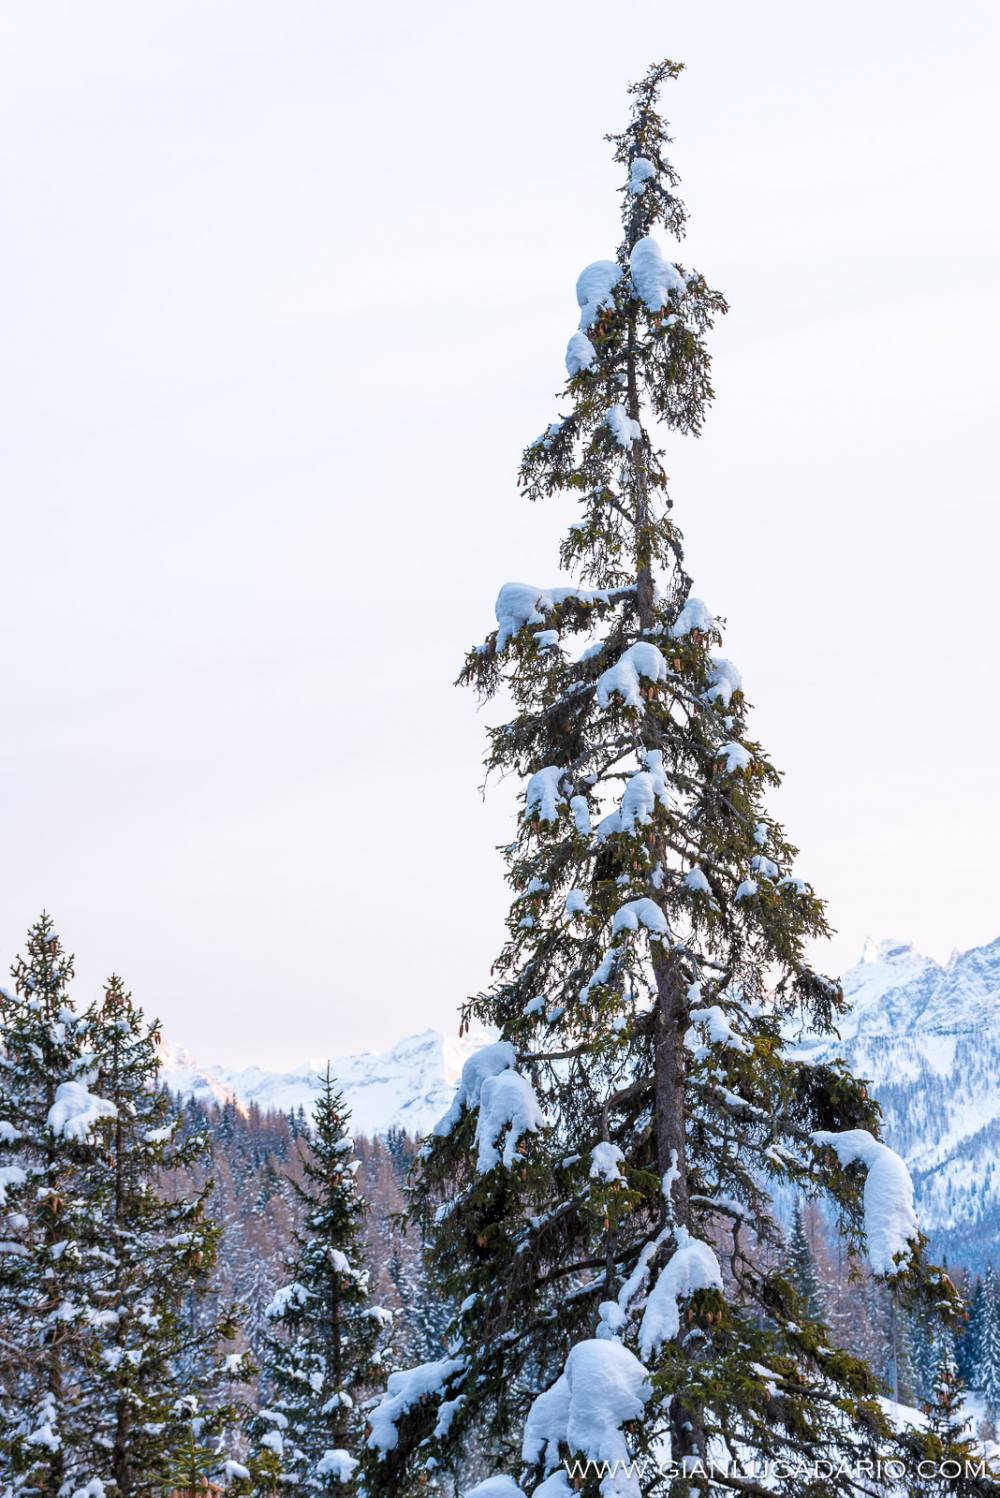 Panorama dal passo Fedaia in inverno - foto 12 - Gianluca Dario Photography